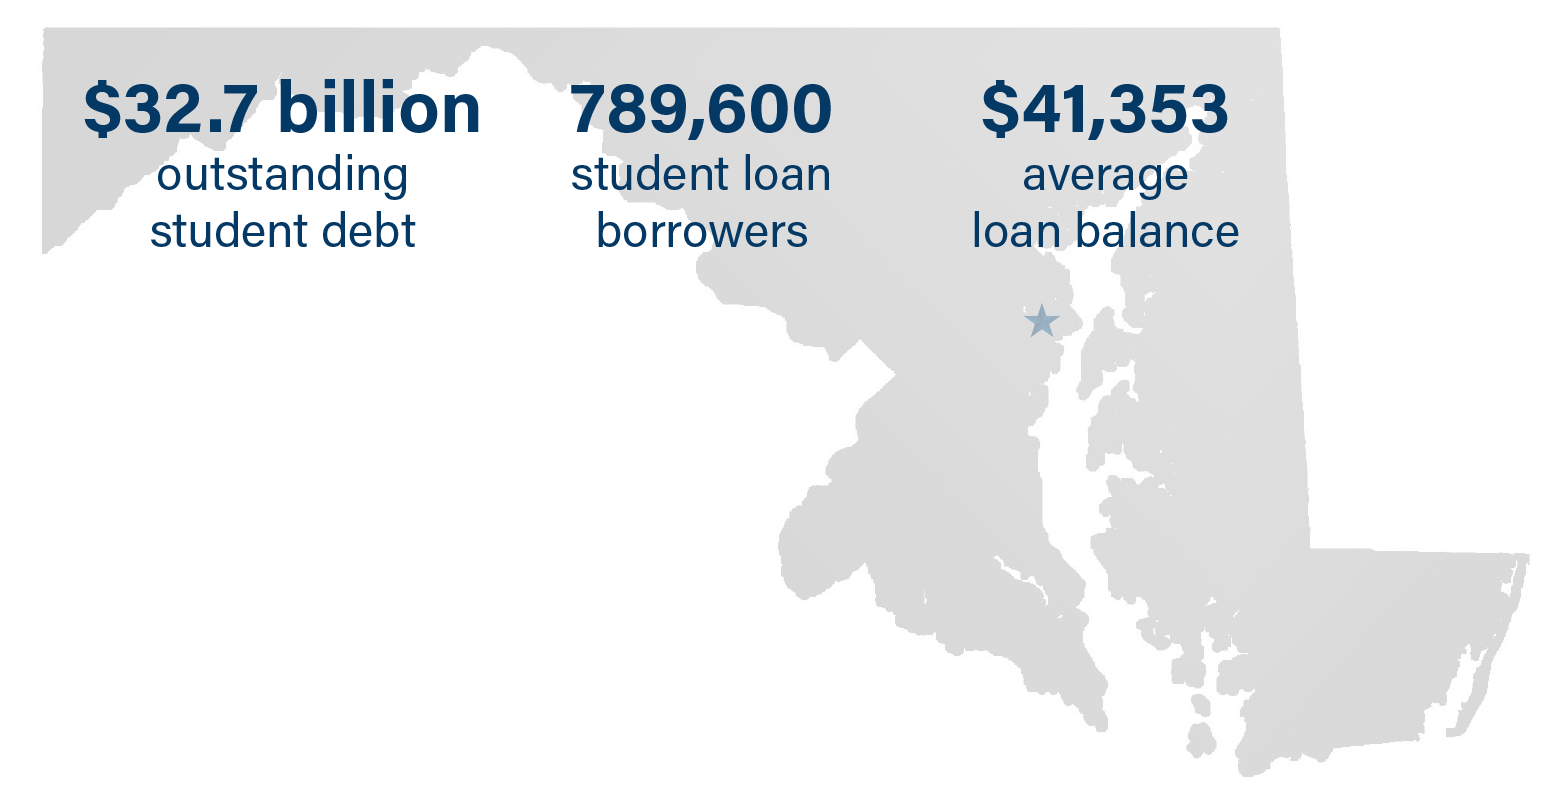 Student debt in Maryland:
32.7 billion dollars in outstanding debt
789,600 student loan borrowers
41,353 dollars in average loan balance